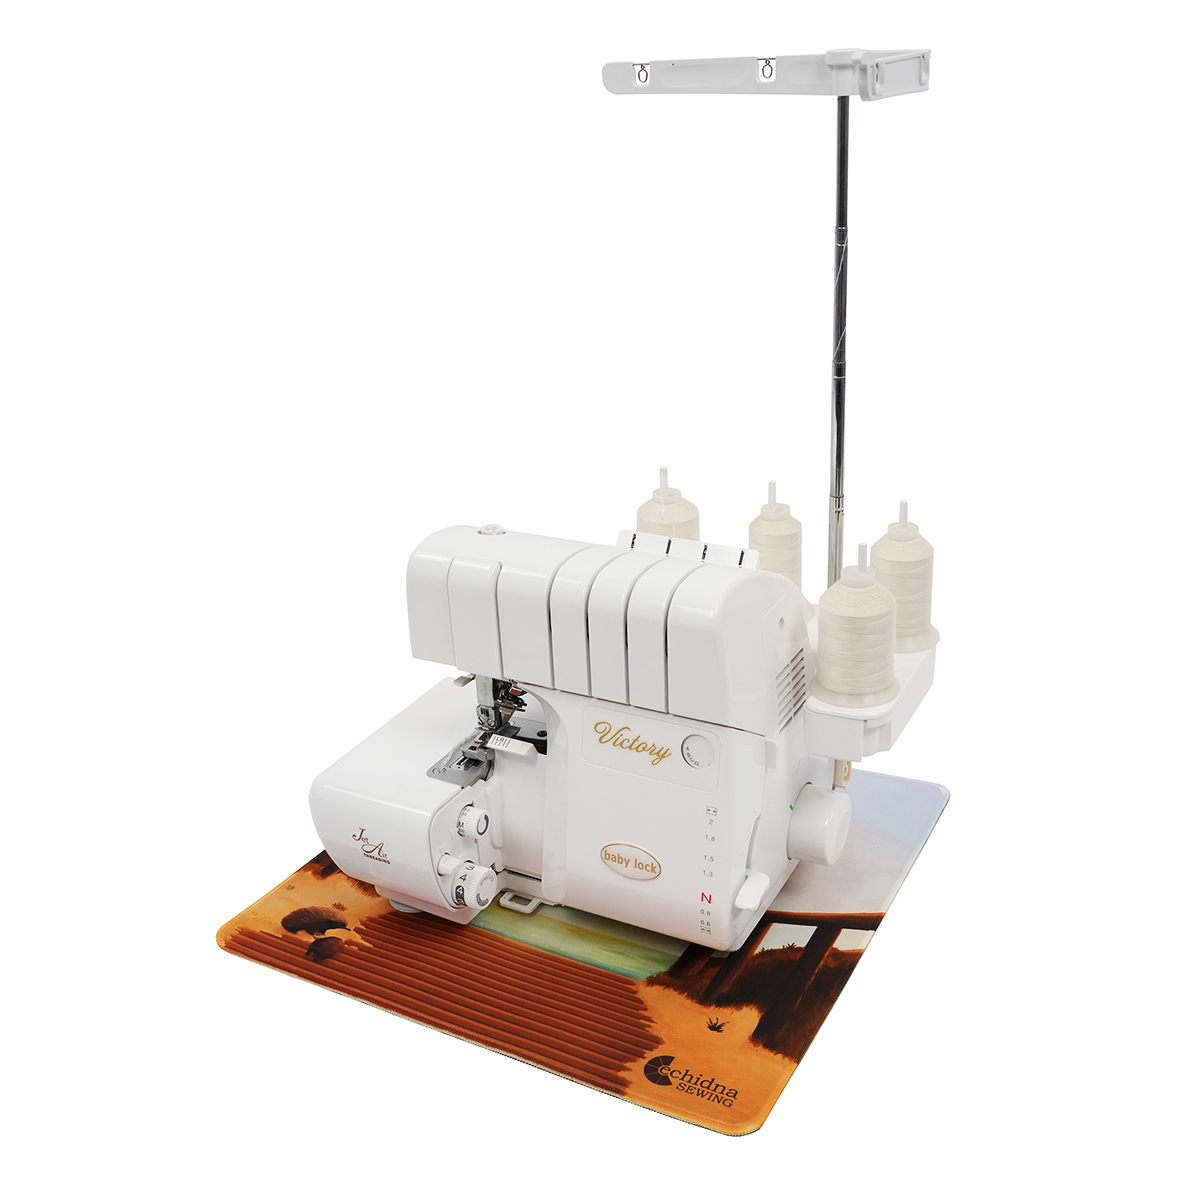 Large Sewing Machine Muffling Mat - Reduce Vibration & Noise when